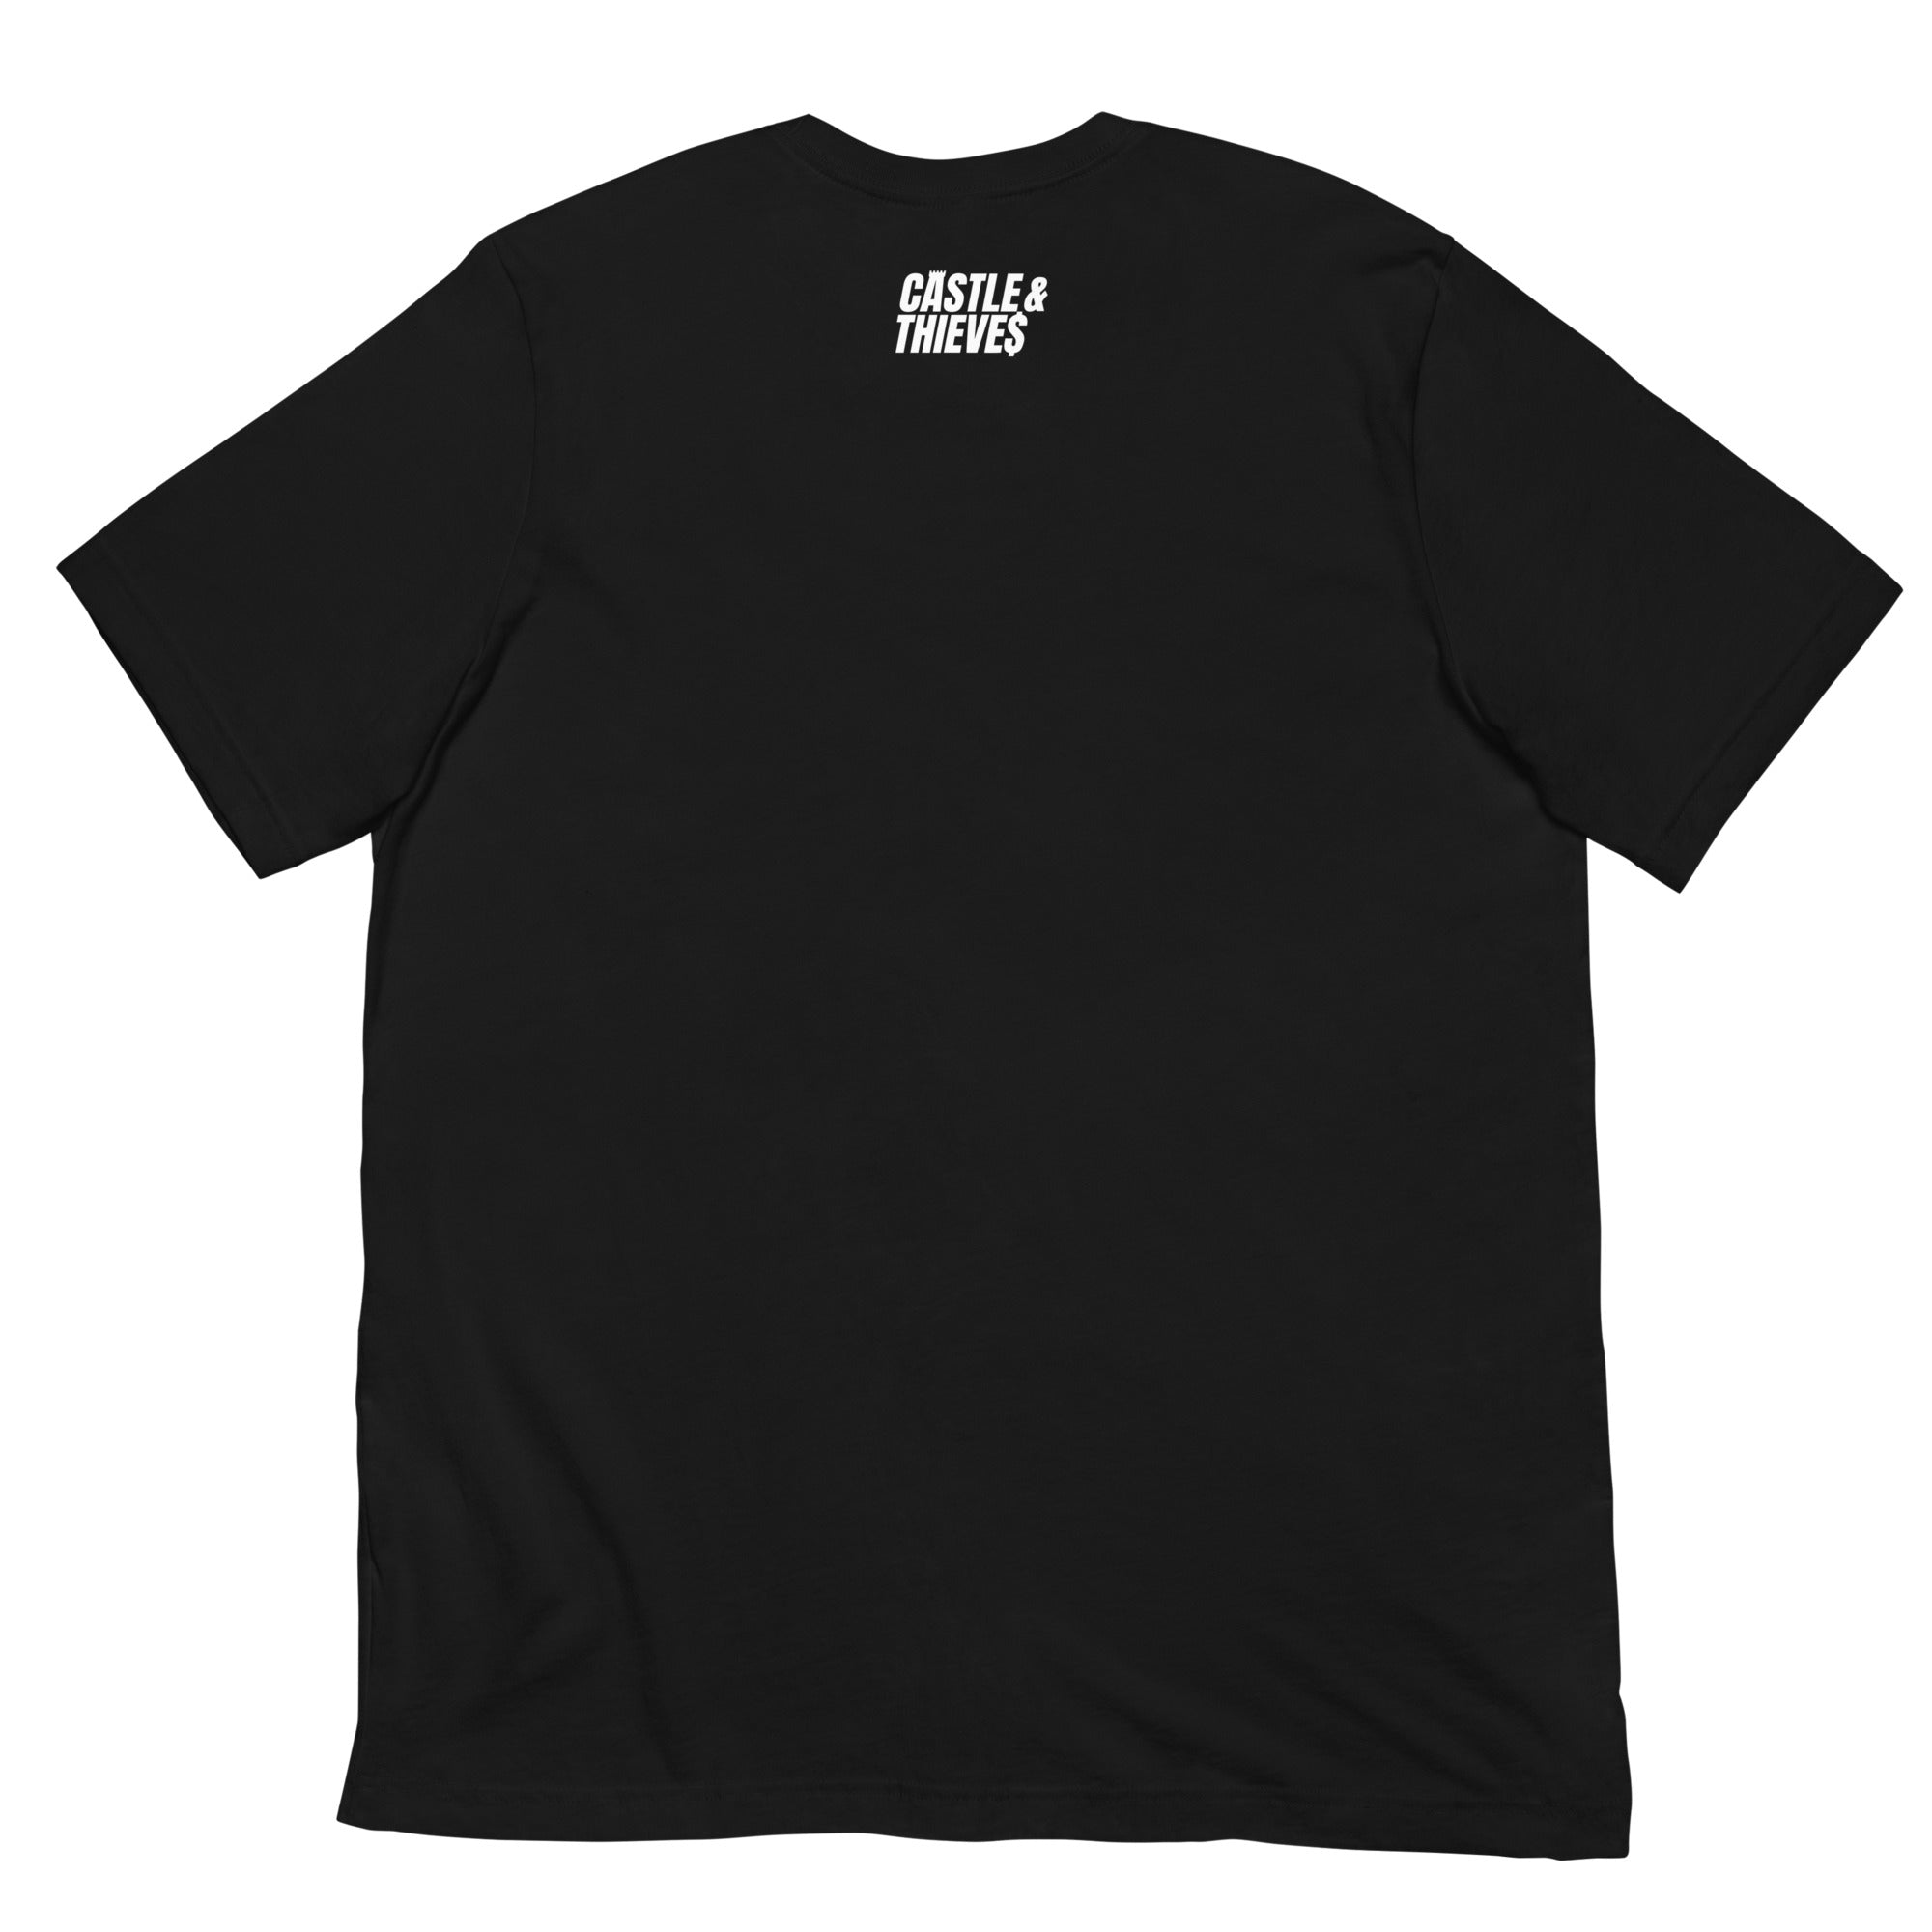 Kris Bourne - Unisex t-shirt